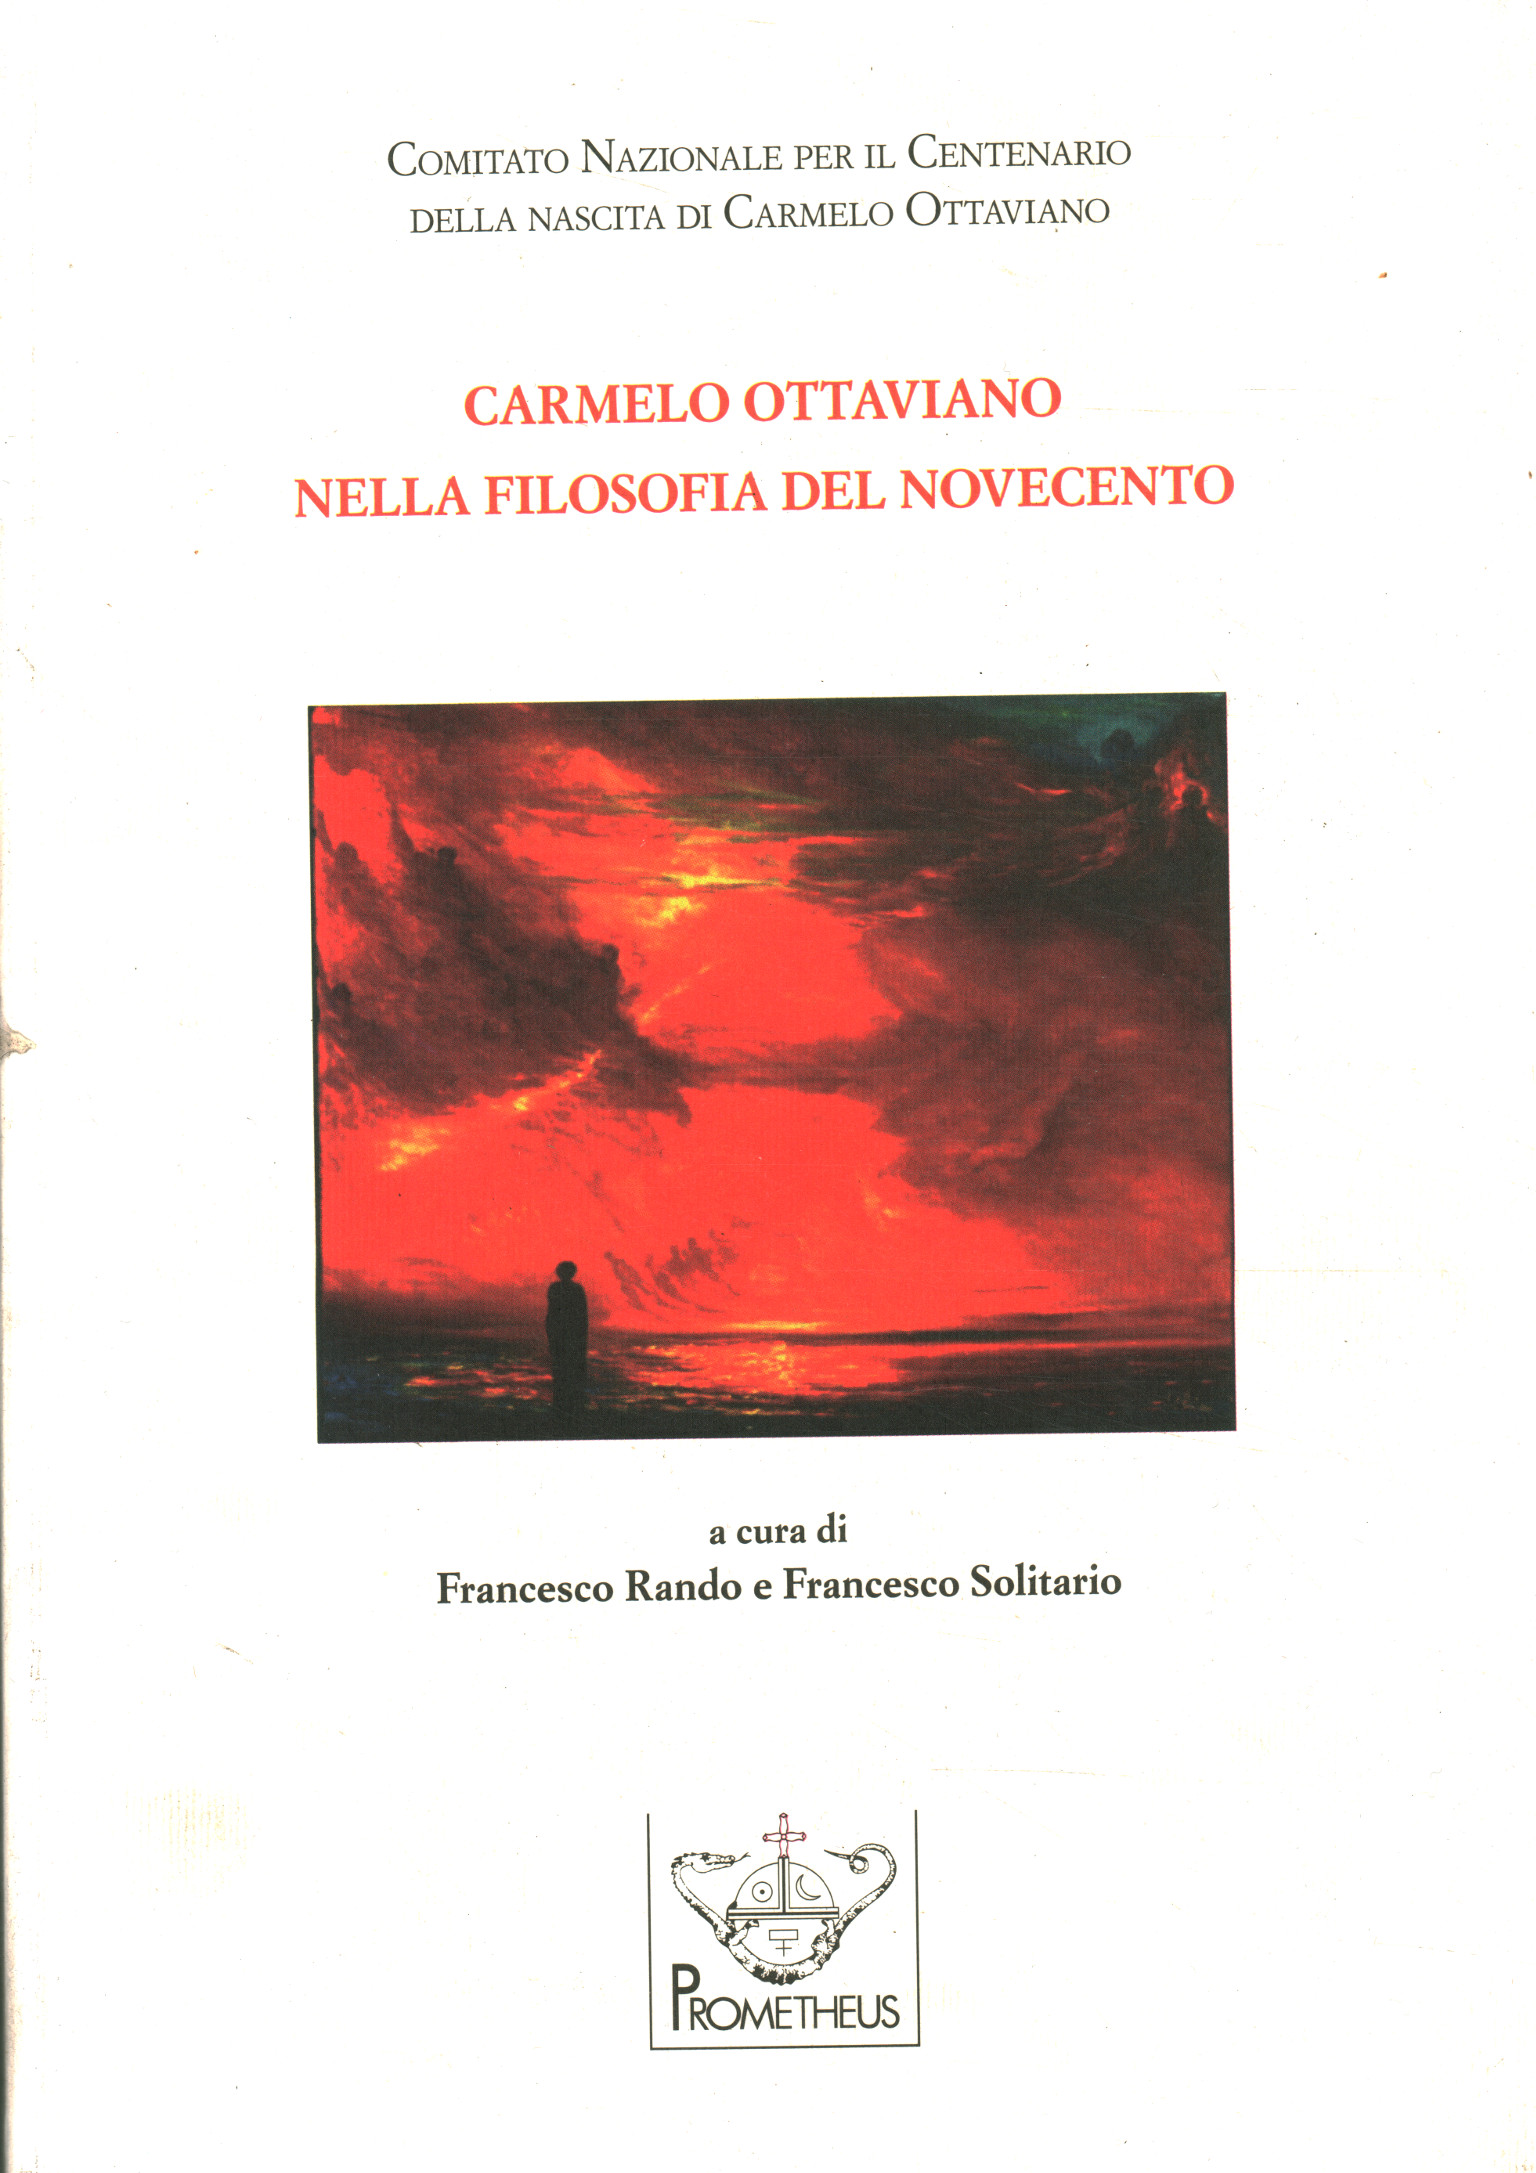 Carmelo Ottaviano in the philosophy of No